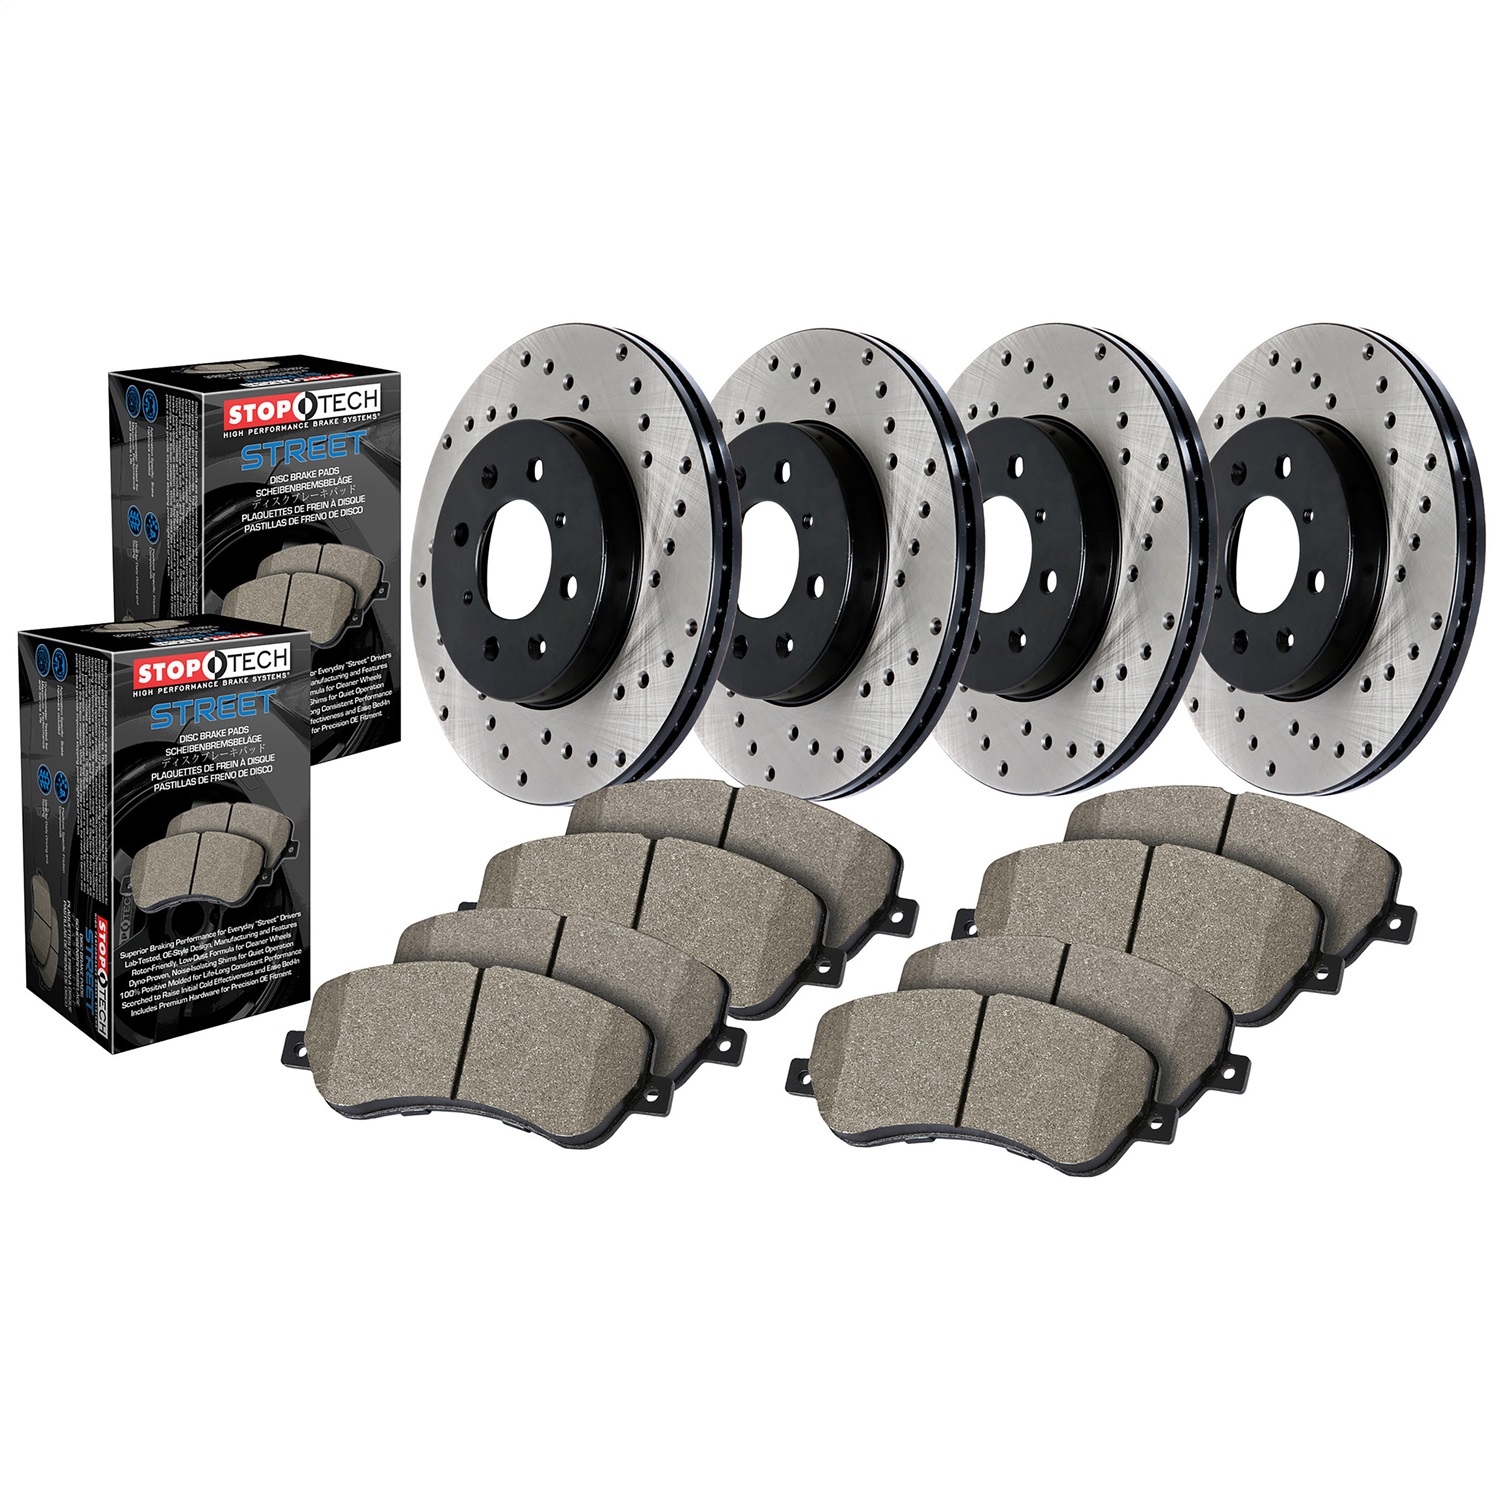 StopTech 936.33148 Street - 4 Wheel Disc Brake Kit w/Cross-Drilled Rotor